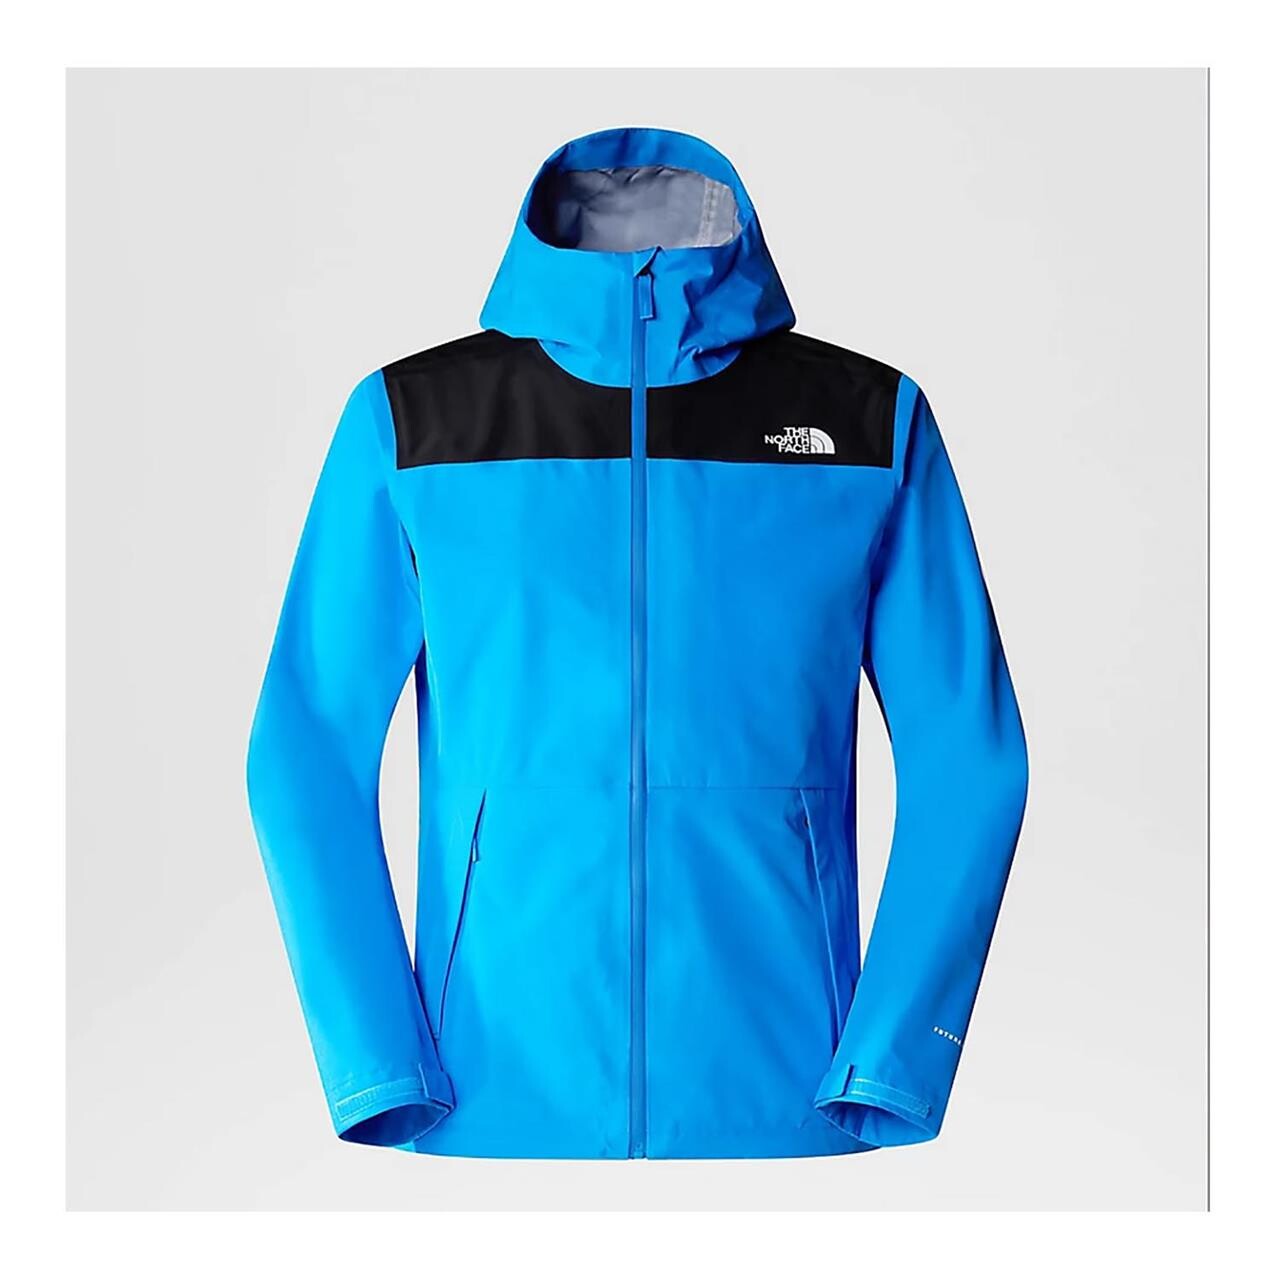 Se The North Face Mens Dryzzle Futurelight Jacket (Blå (OPTIC BLUE/TNF BLACK) Medium) hos Friluftsland.dk